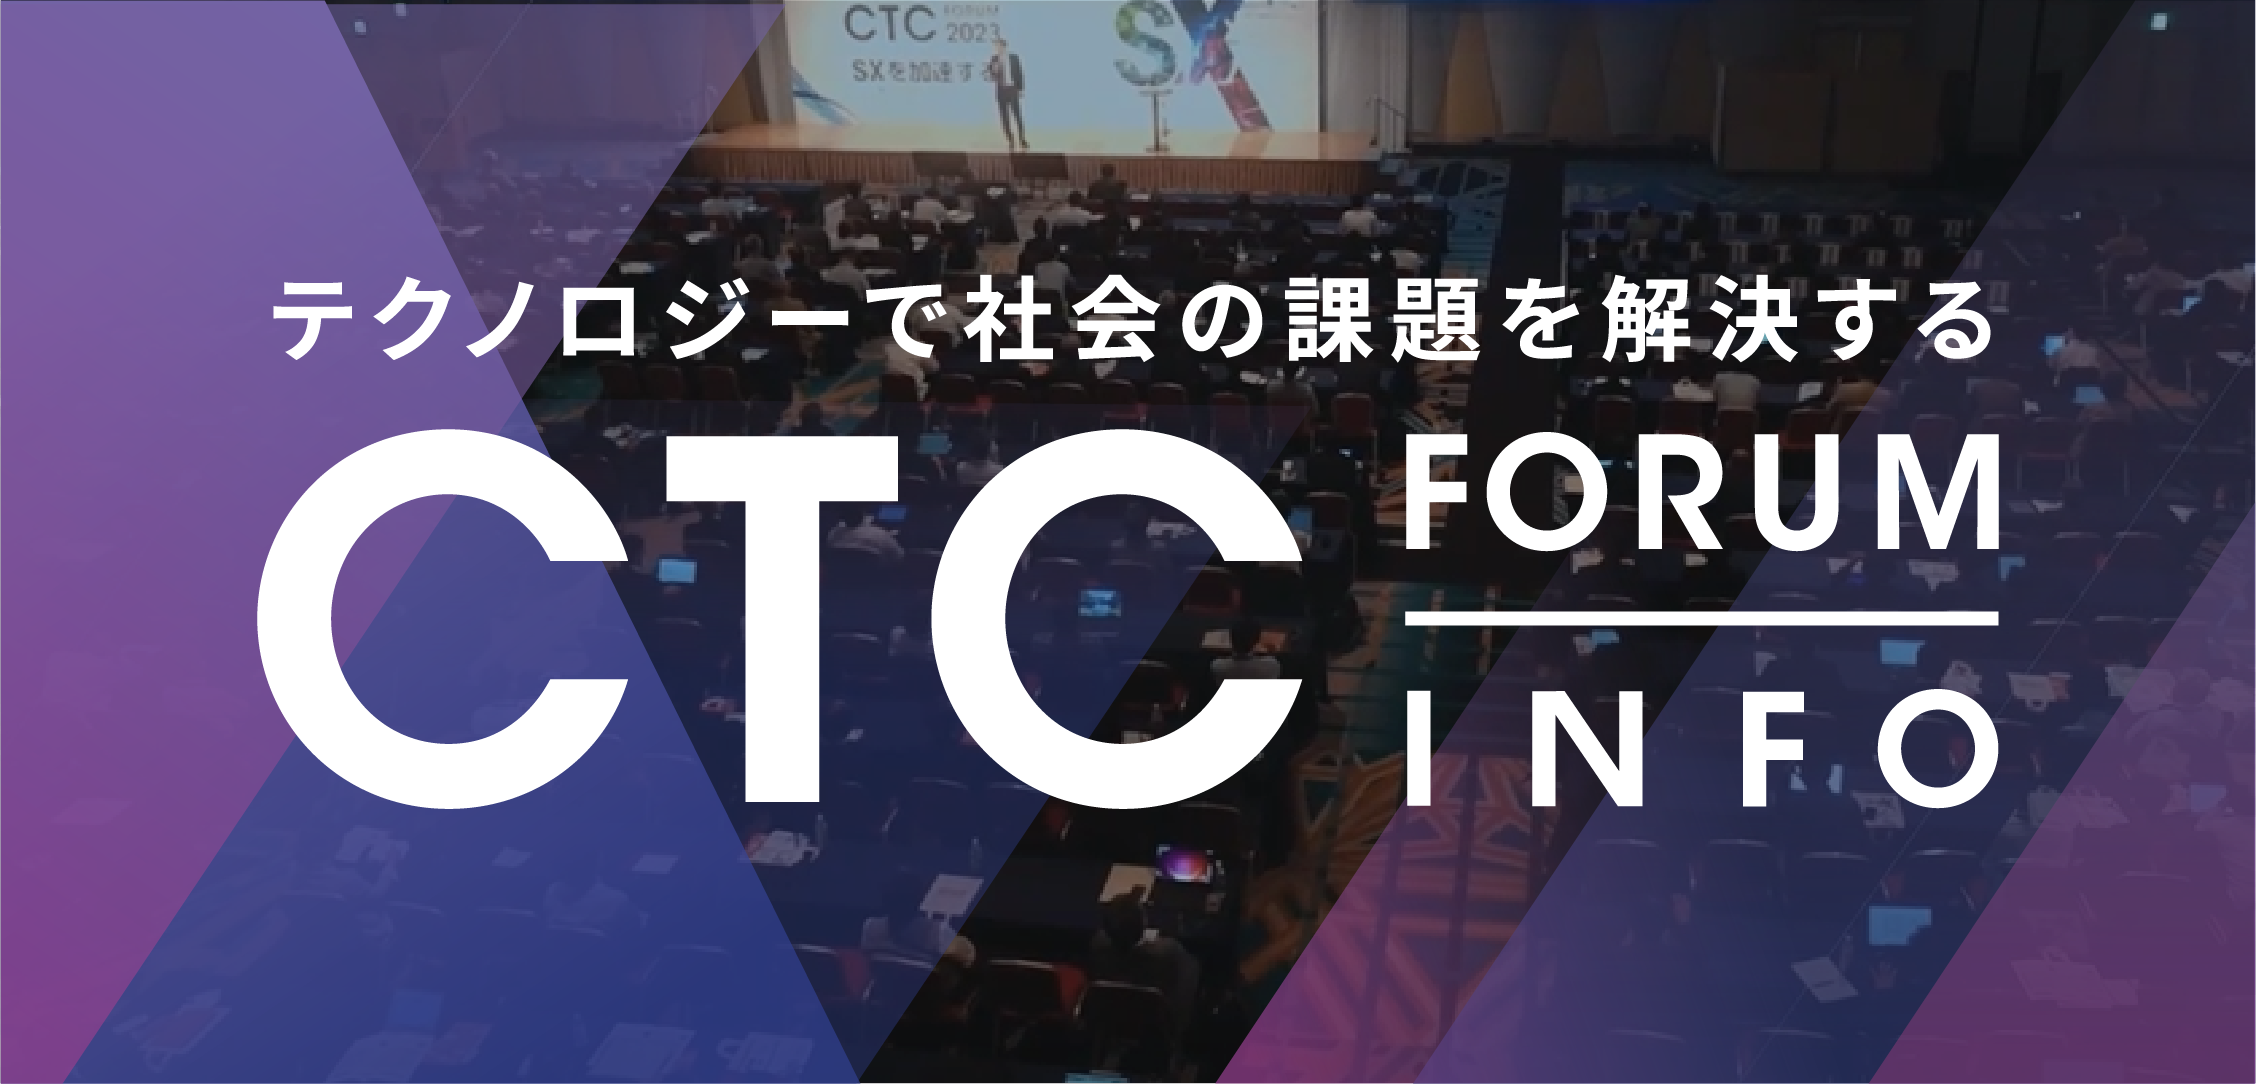 CTC Forum イベントレポート